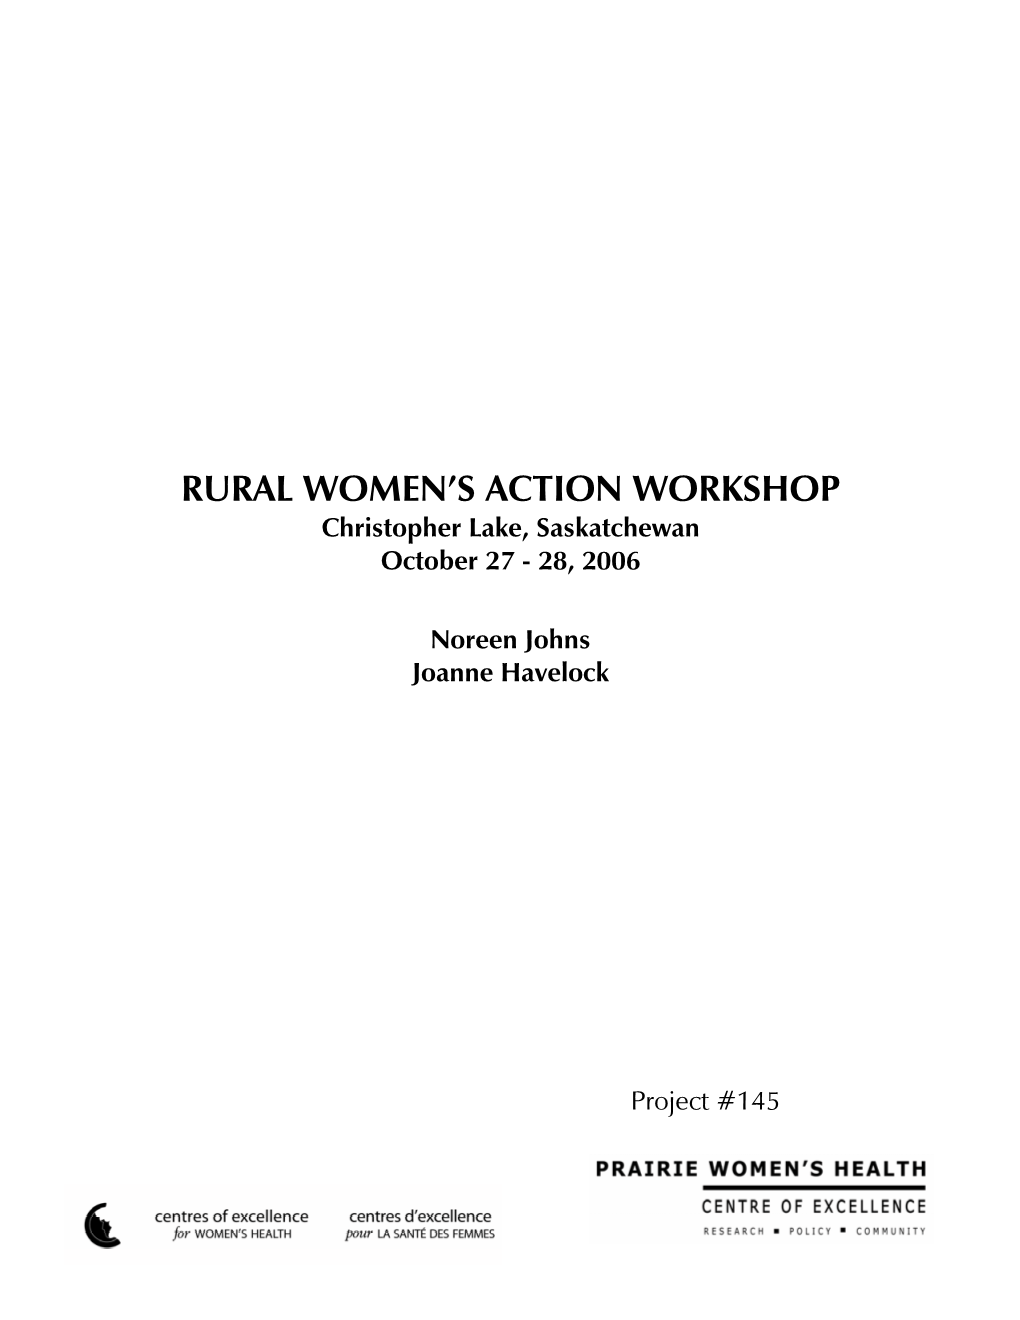 Rural Women's Action Workshop Christopher Lake, Saskatchewan – October 27-28, 2006 Report Action Chart